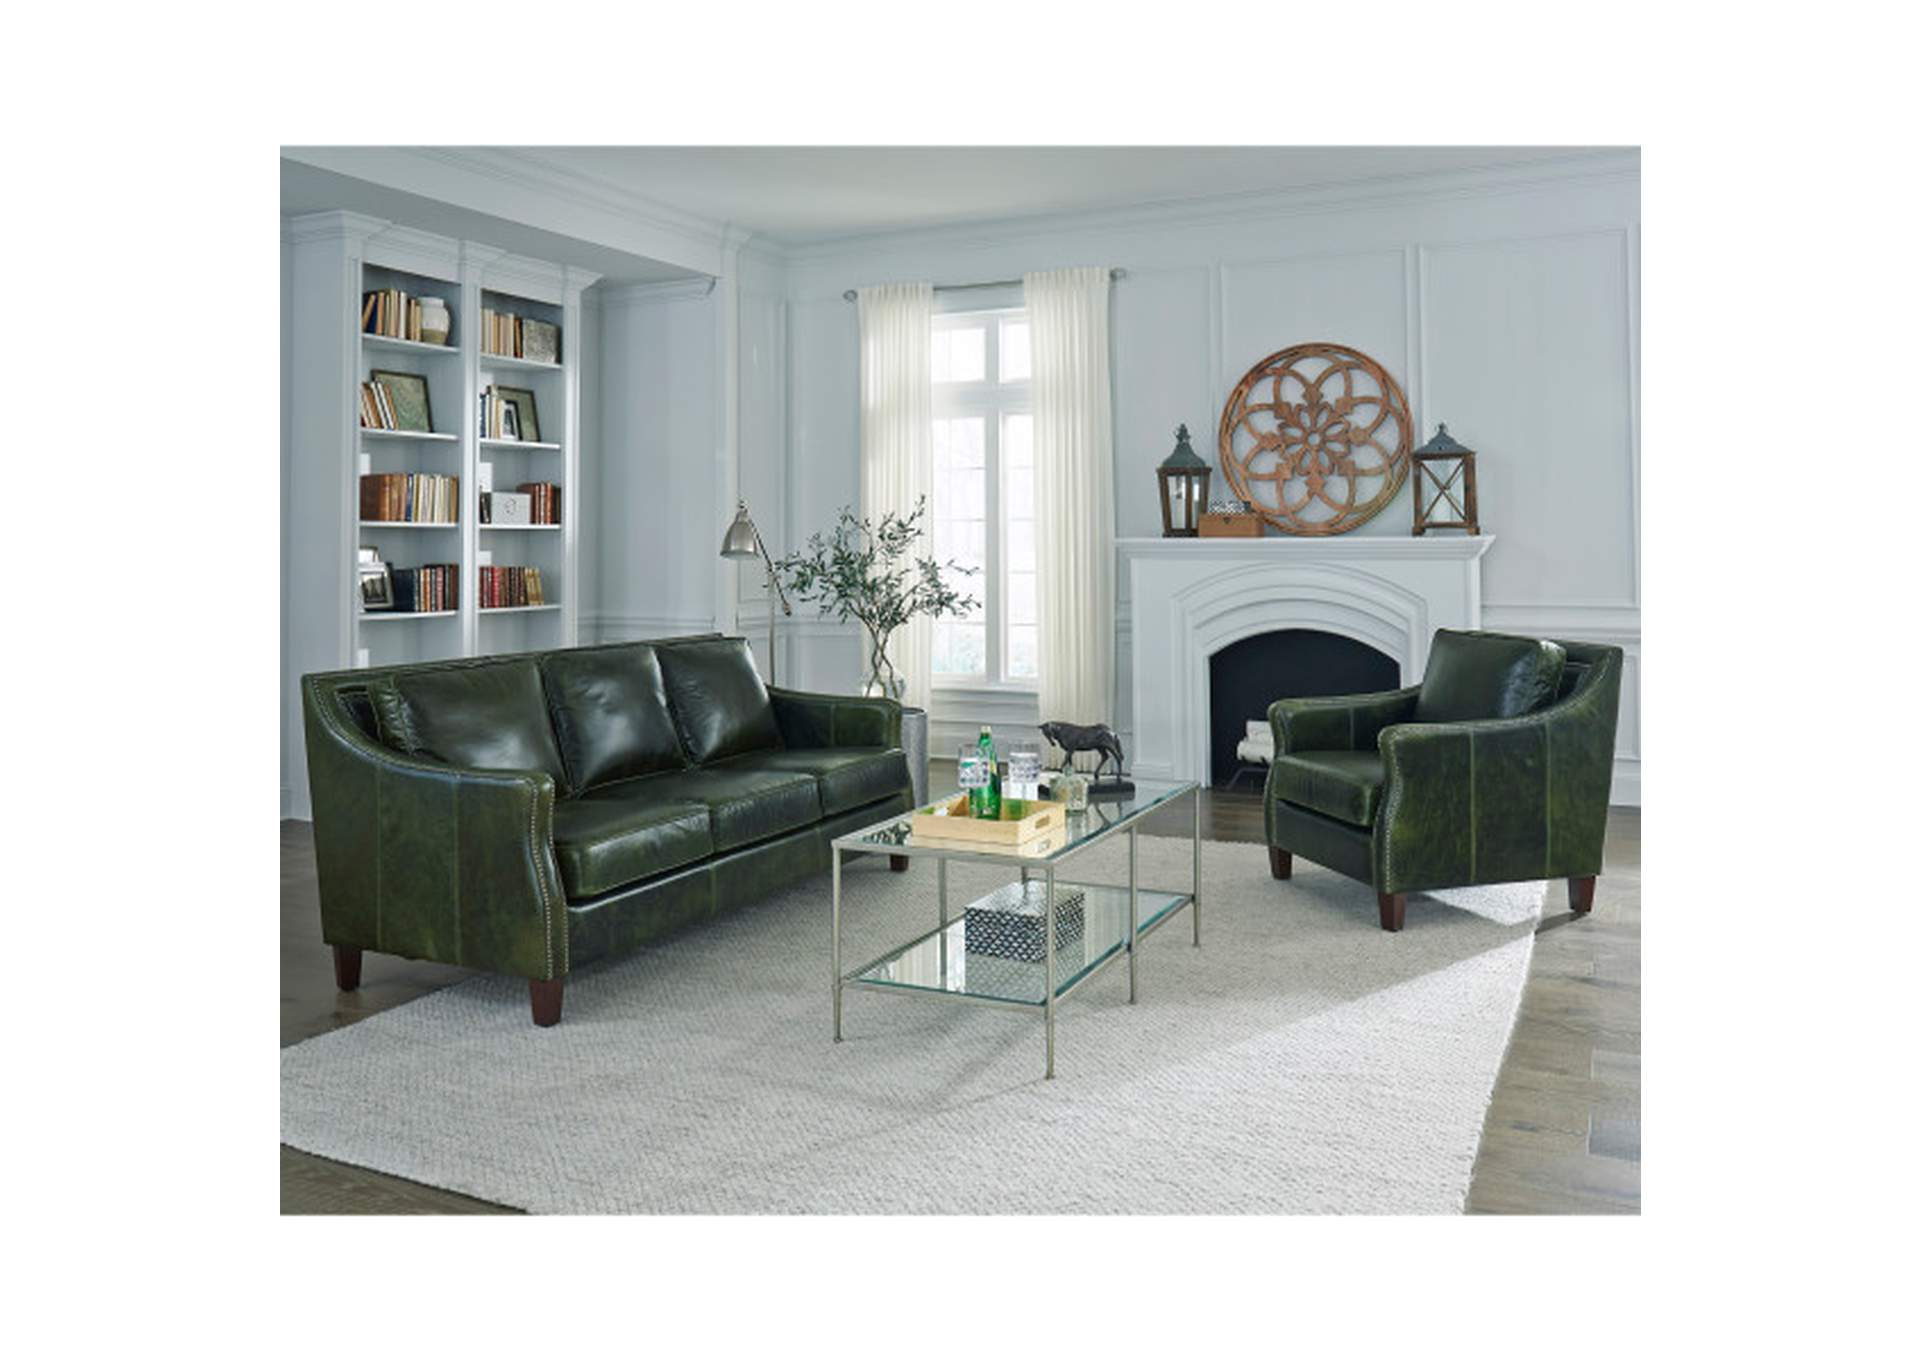 Miles Leather Loveseat in Fescue Green,Pulaski Furniture